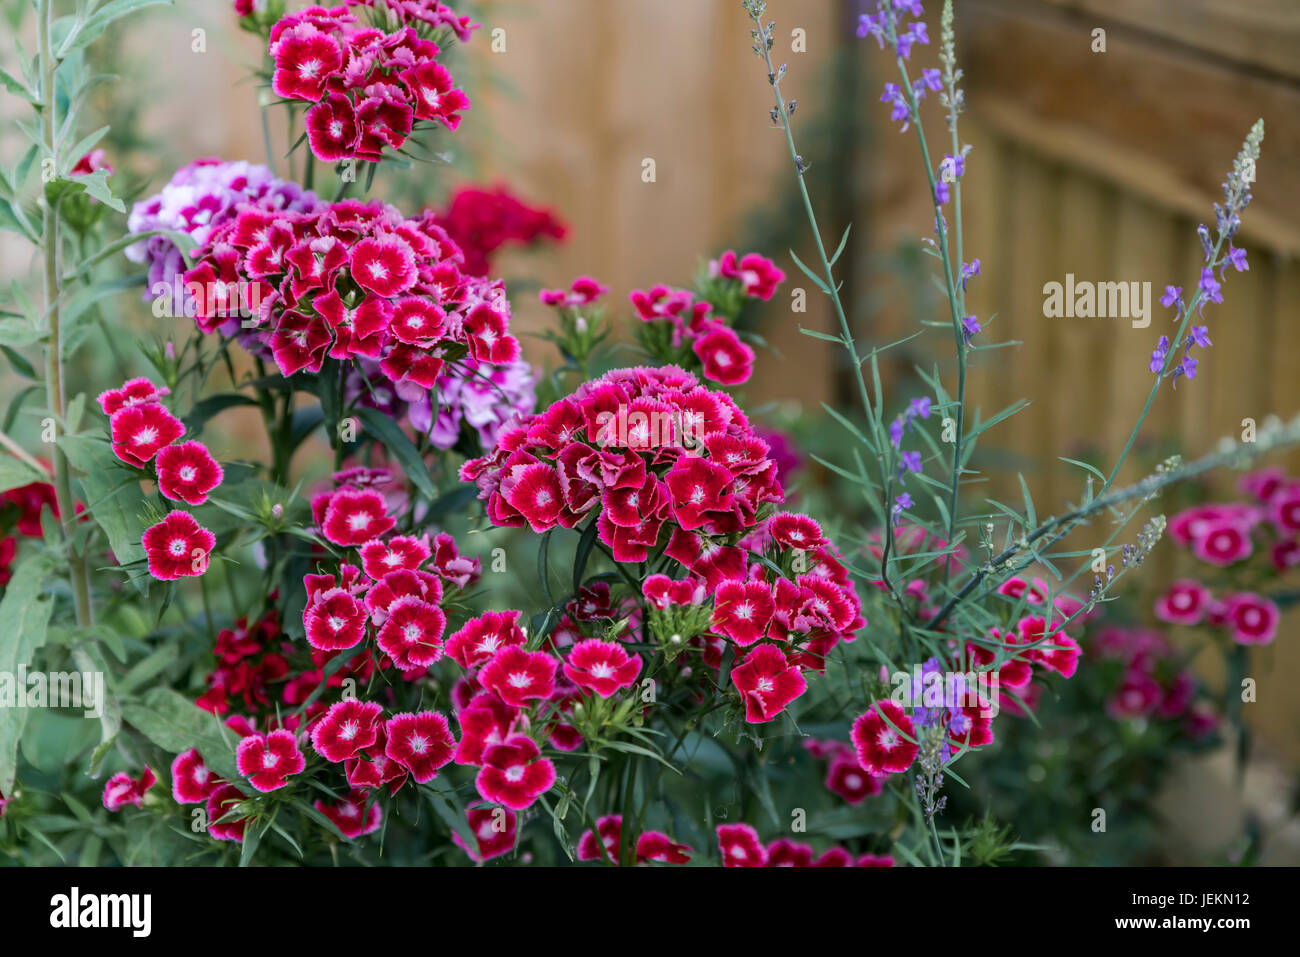 Garden flowers Stock Photo